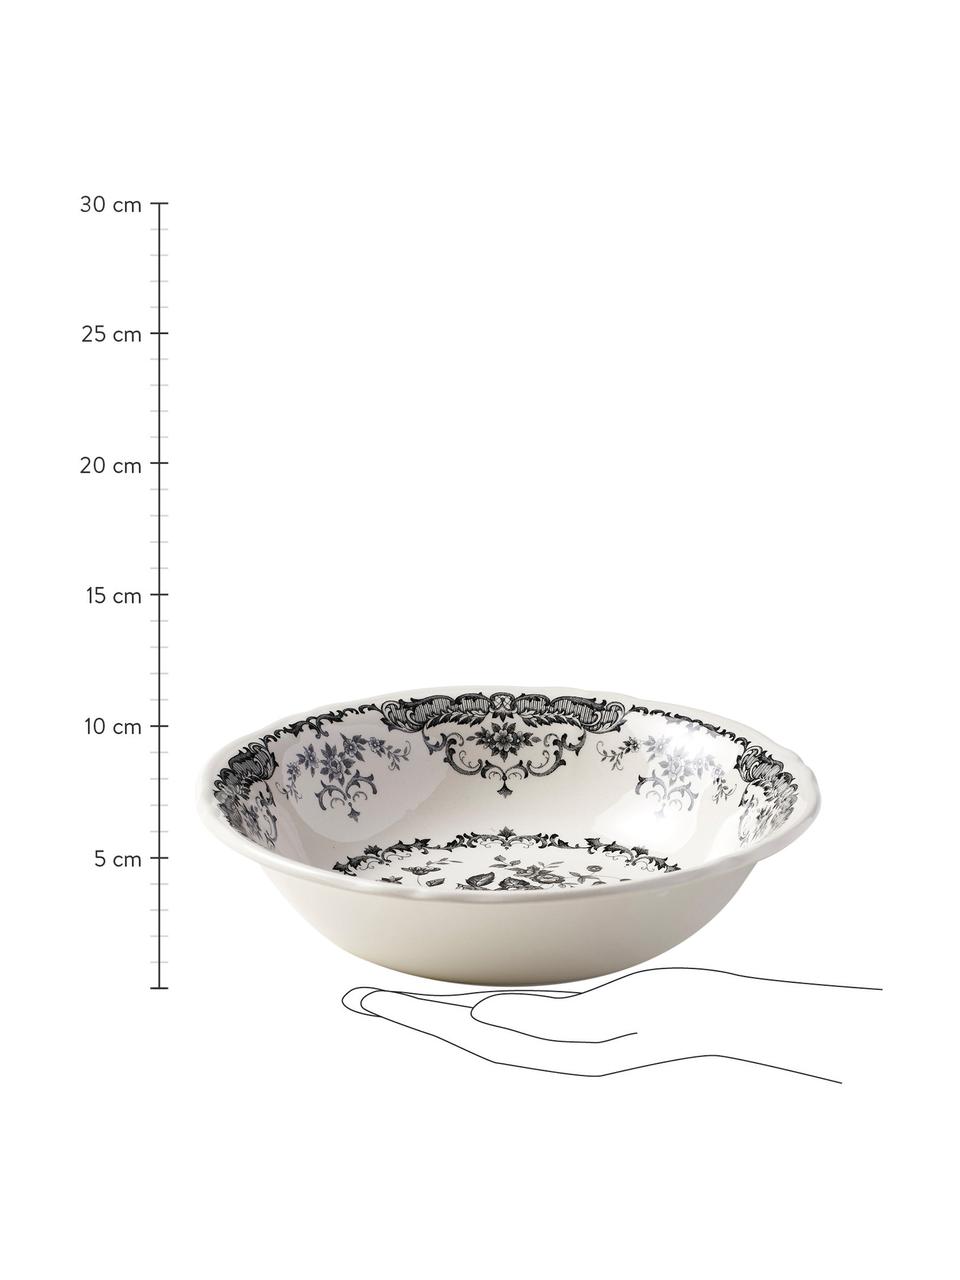 Salátová mísa s květinovým vzorem, Ø 24 cm, Keramika, Bílá, černá, Ø 24 cm, V 8 cm